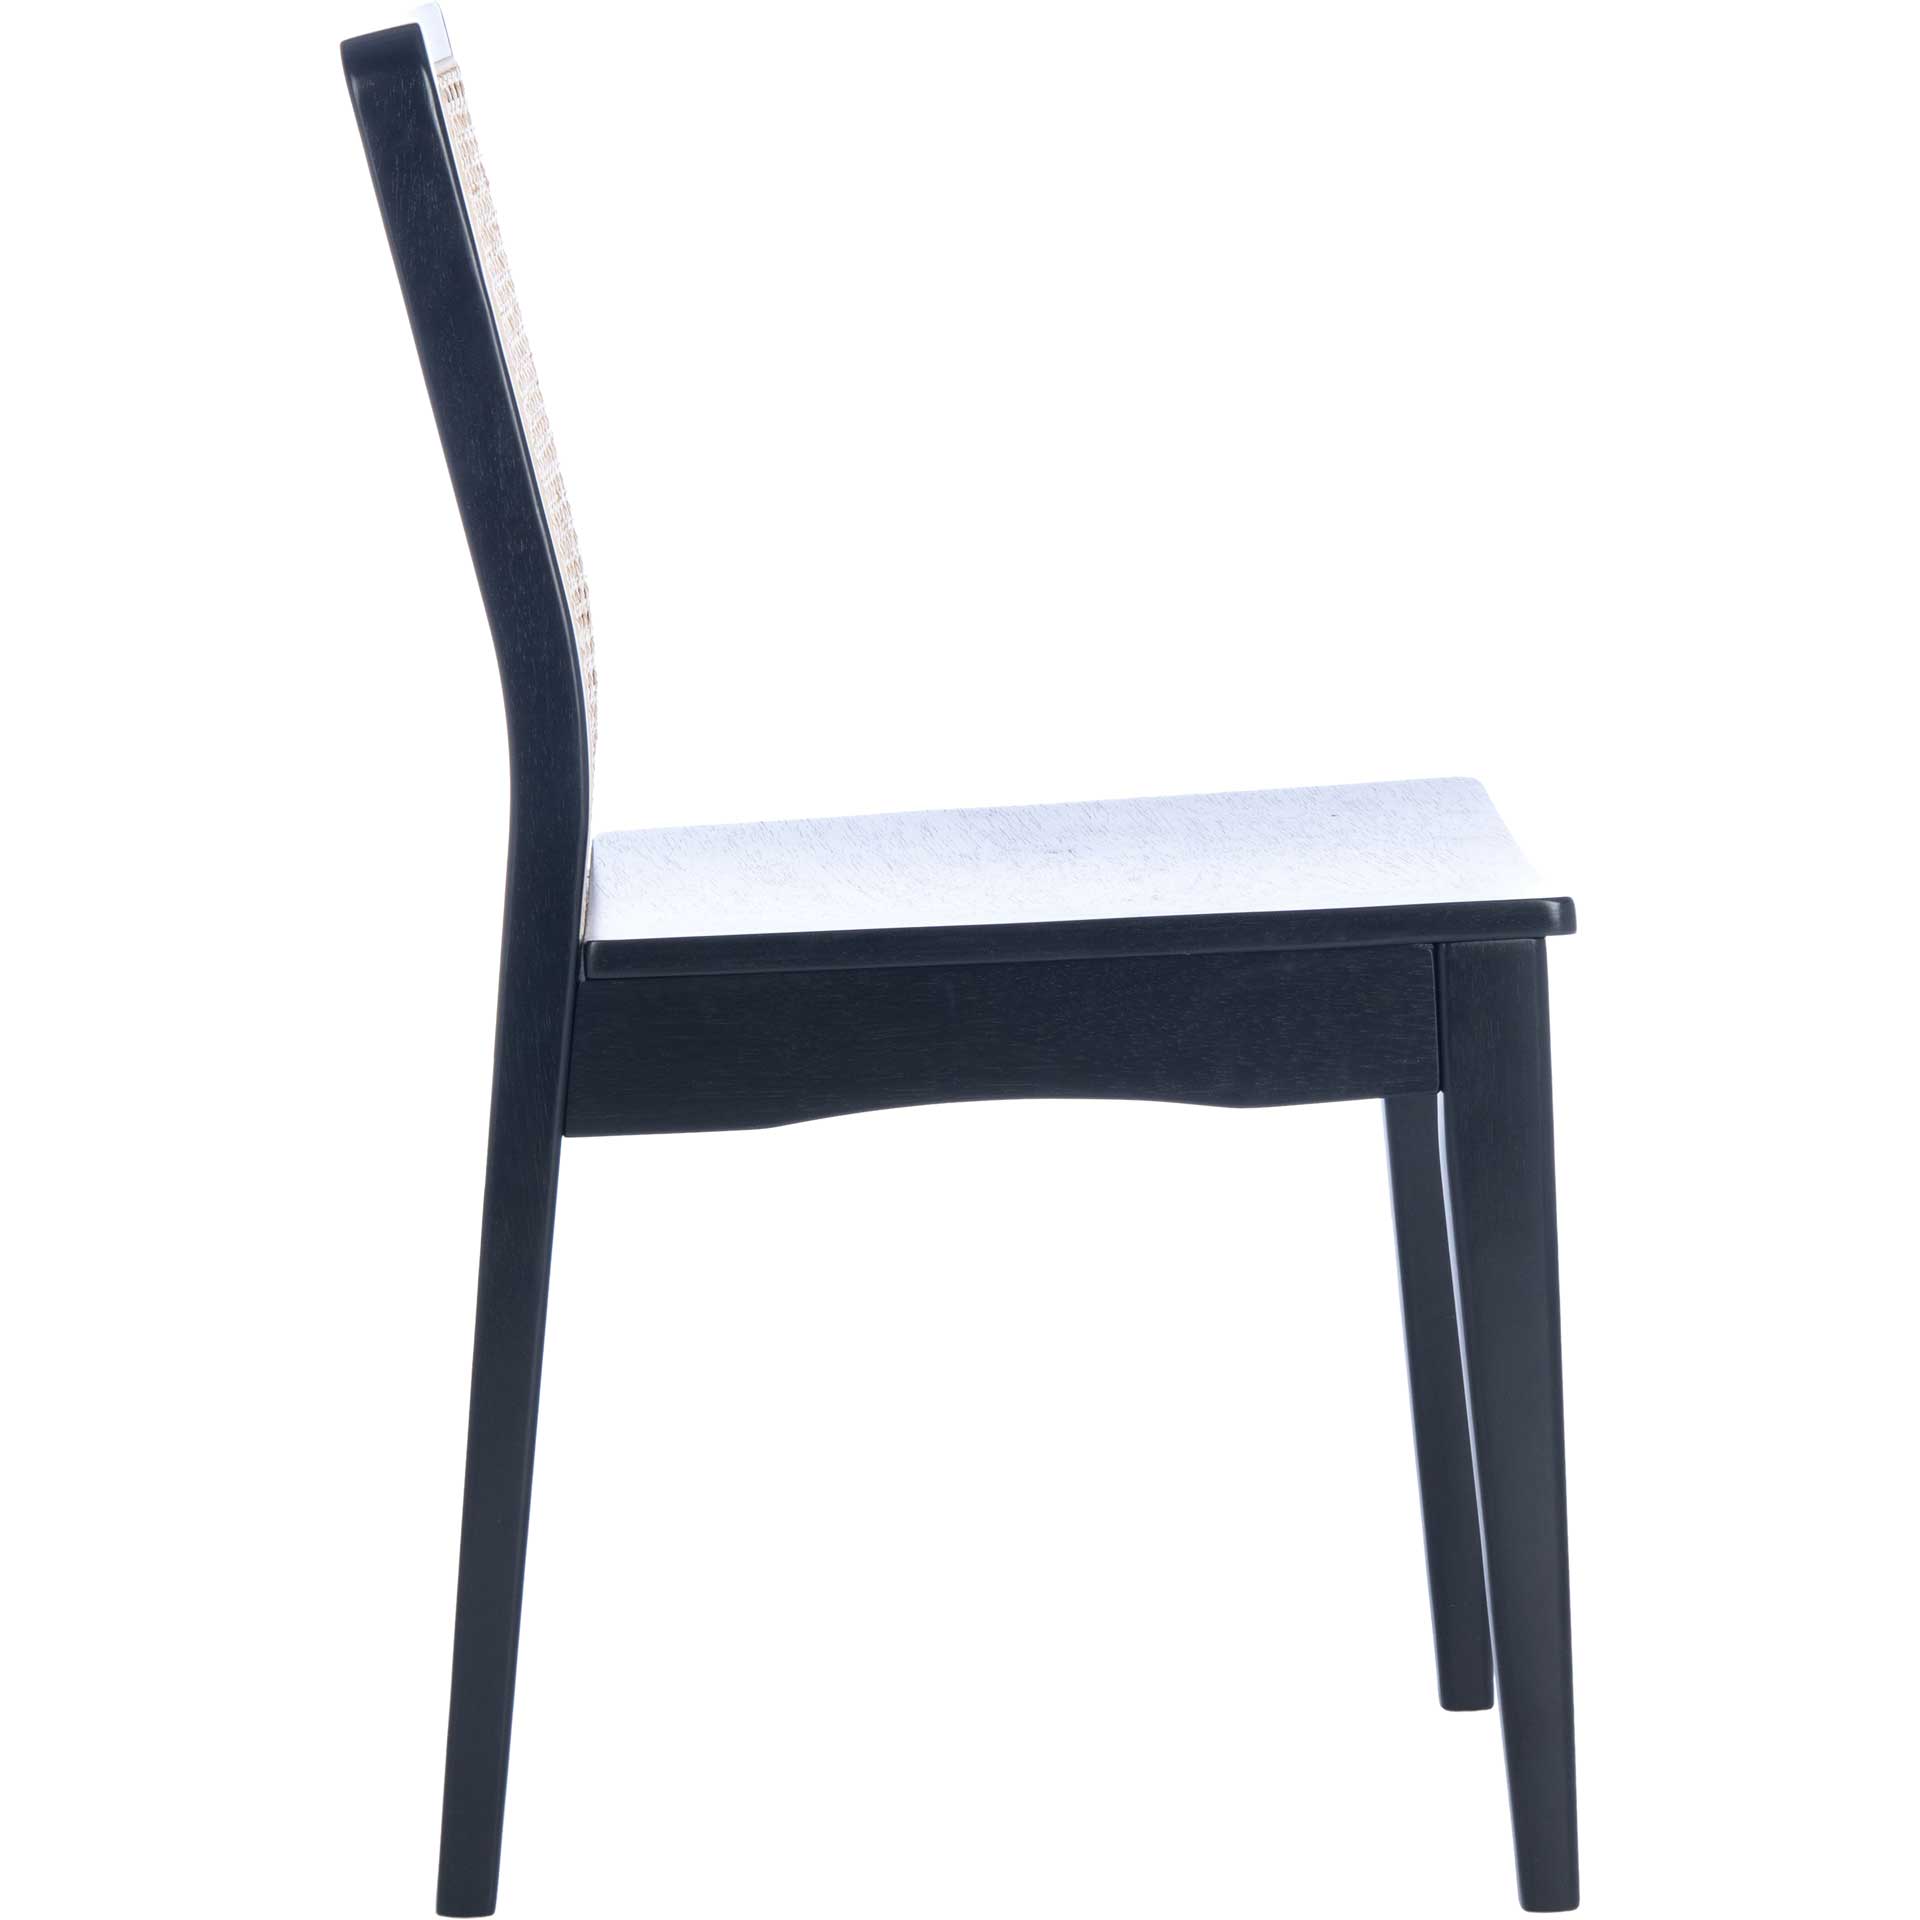 Belomy Rattan Dining Chair Black/Natural (Set of 2)